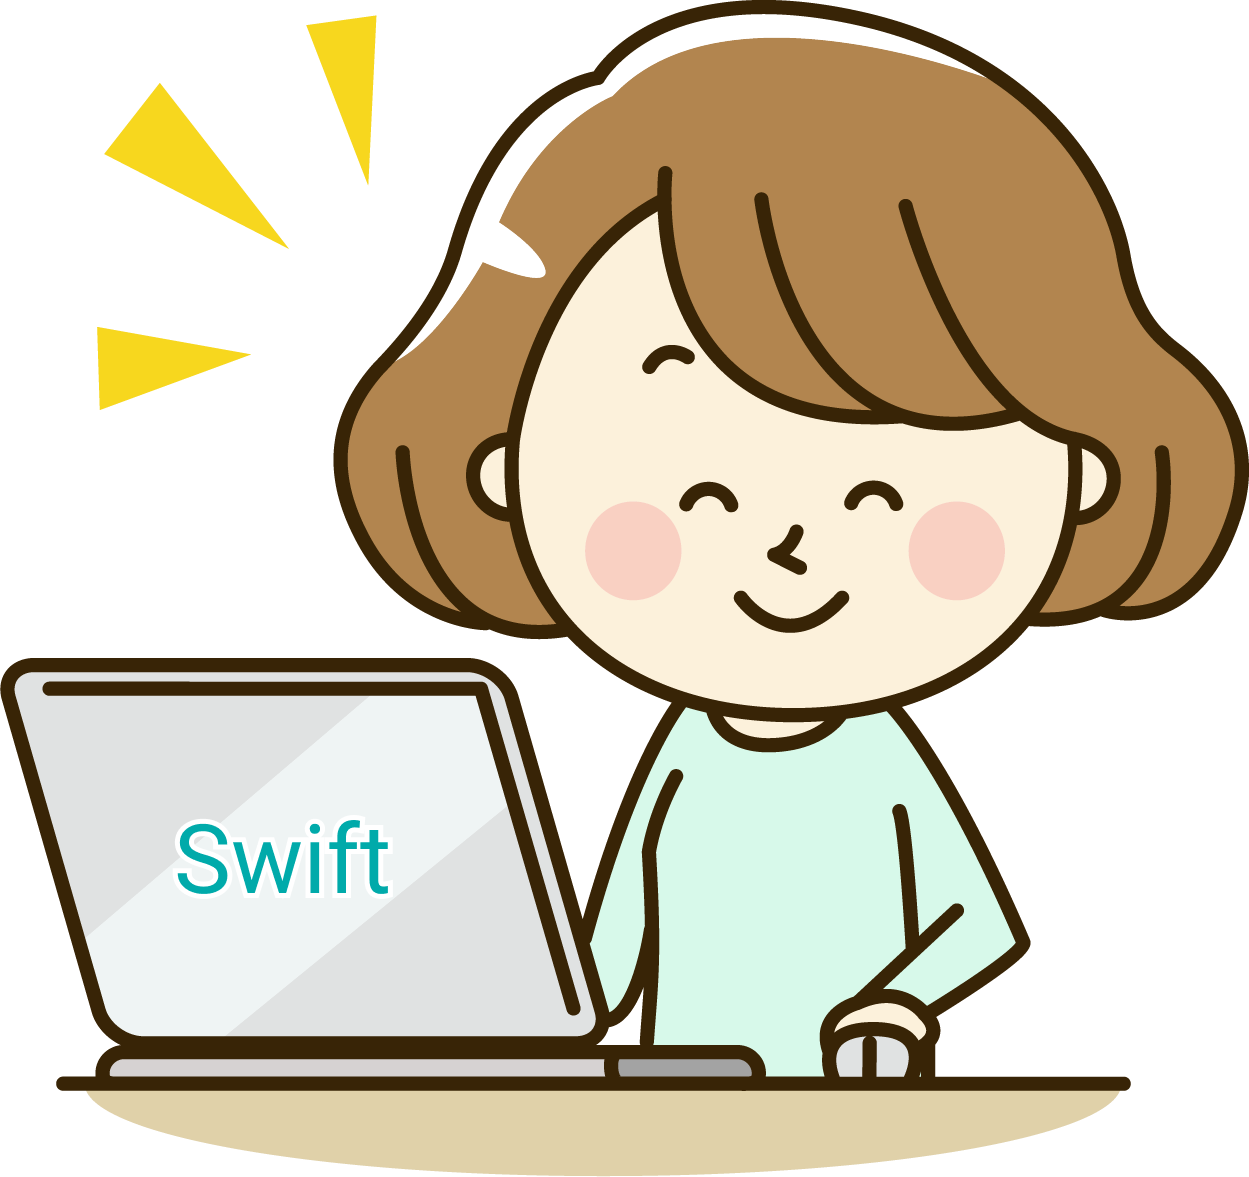 Swift on Windows